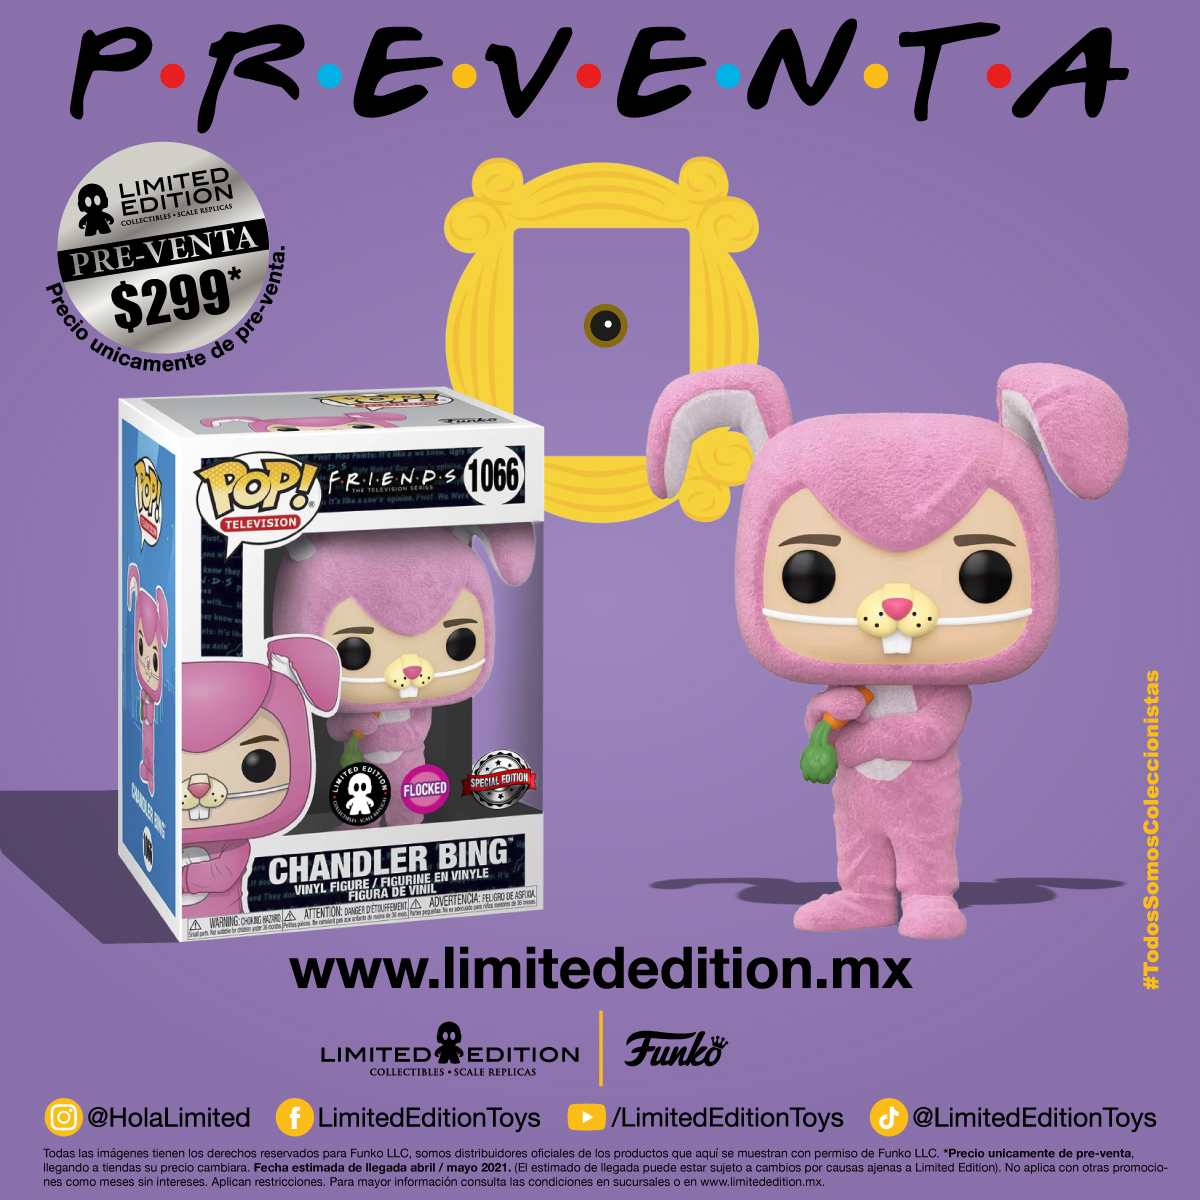 limited-edition-preventa-chandler-1200x1200